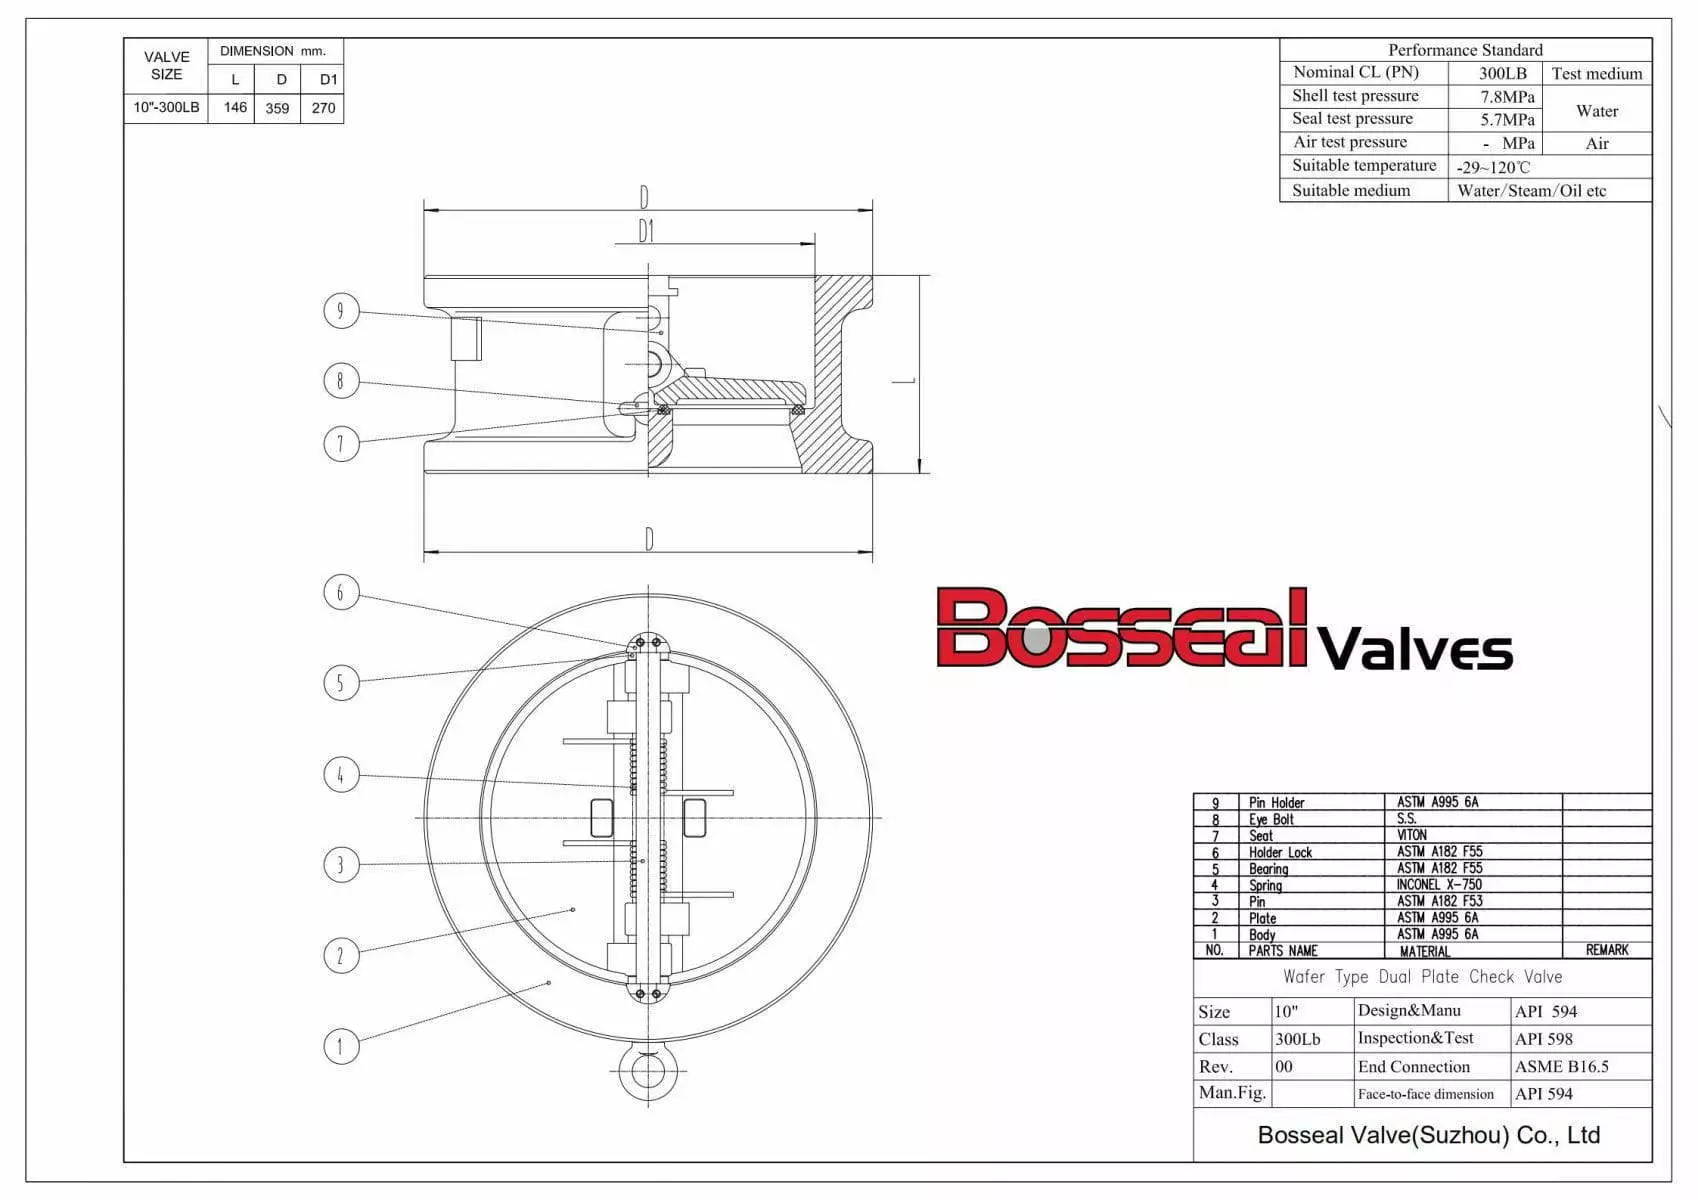 ASTM A995 6A Check Valve Tech Drawing